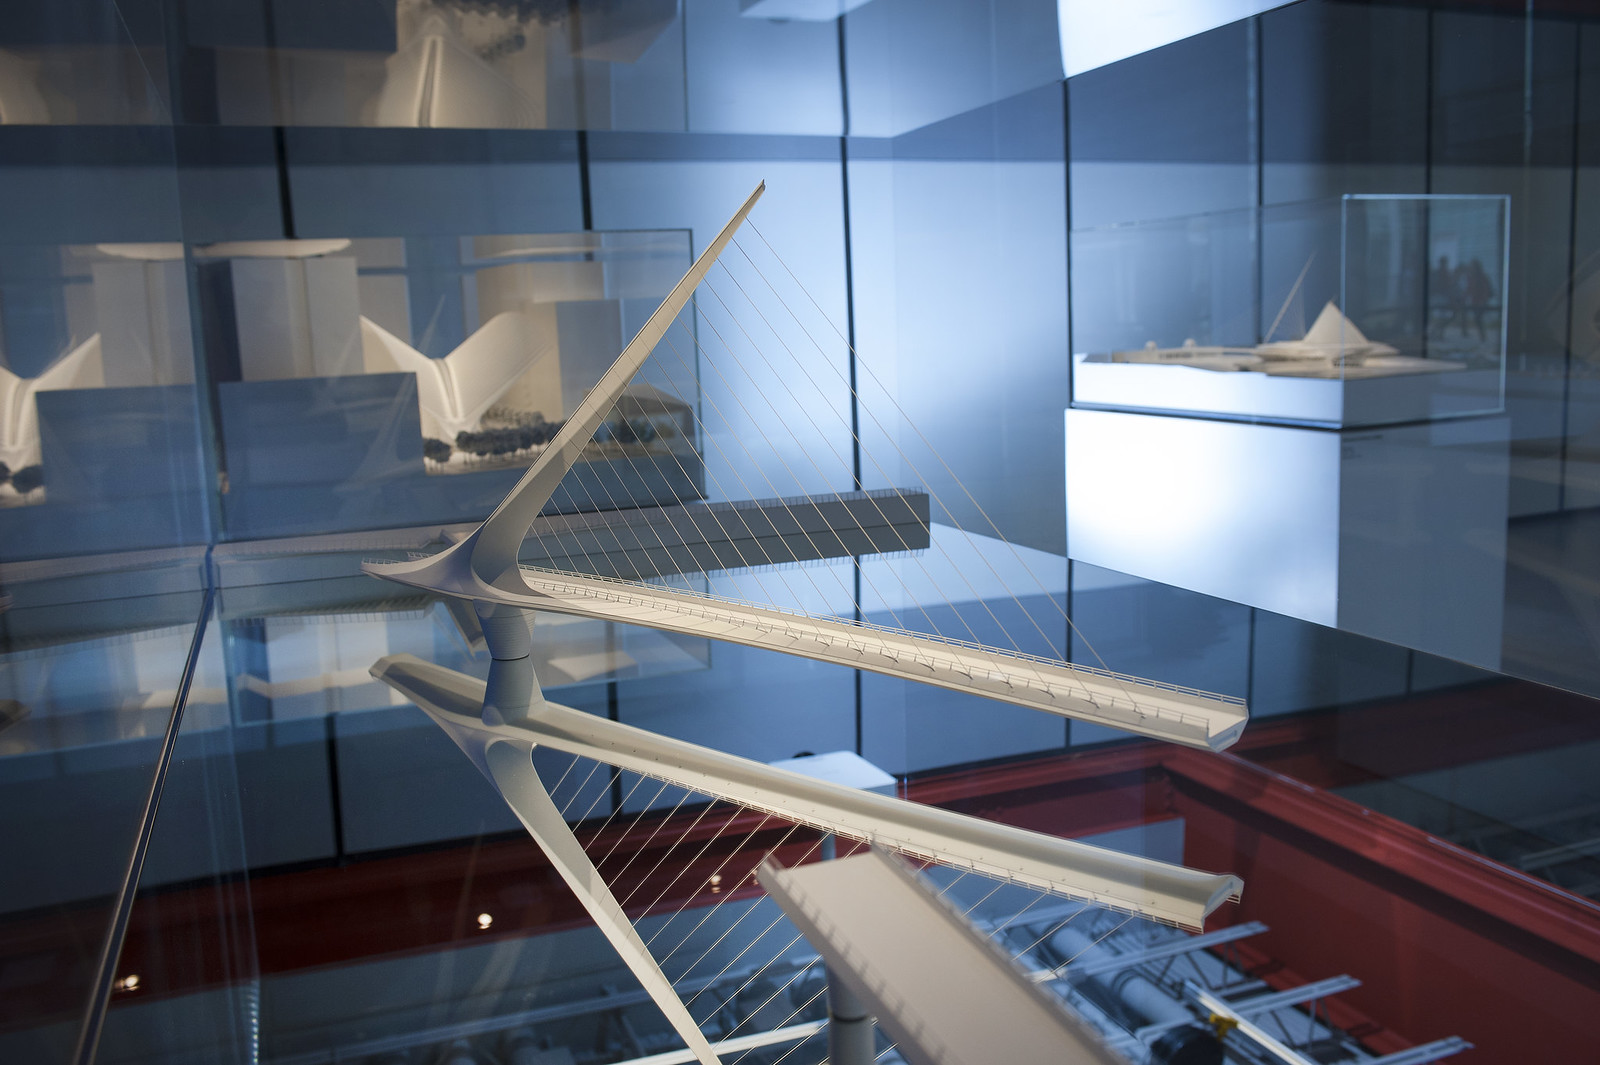 Santiago Calatrava: Exploring the Art of Construction